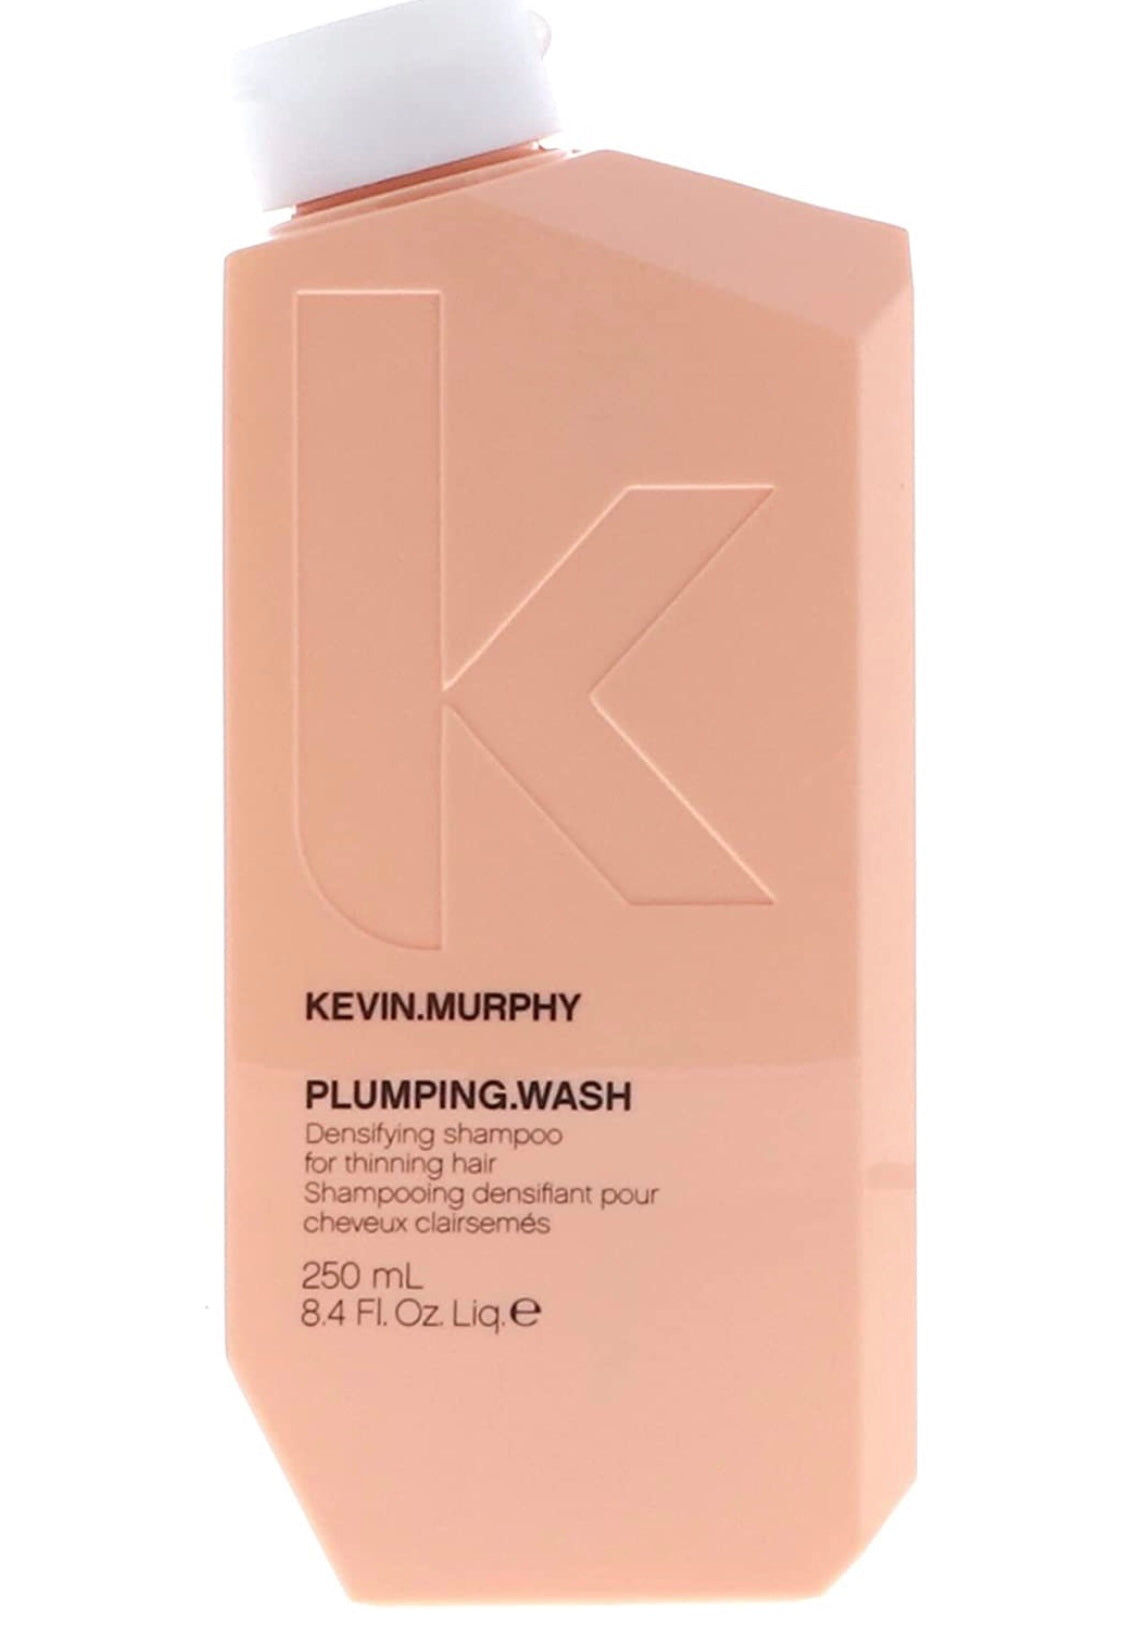 Kevin.Murphy - Plumping.Wash  shampoo 8.4 fl. oz. / 250 ml